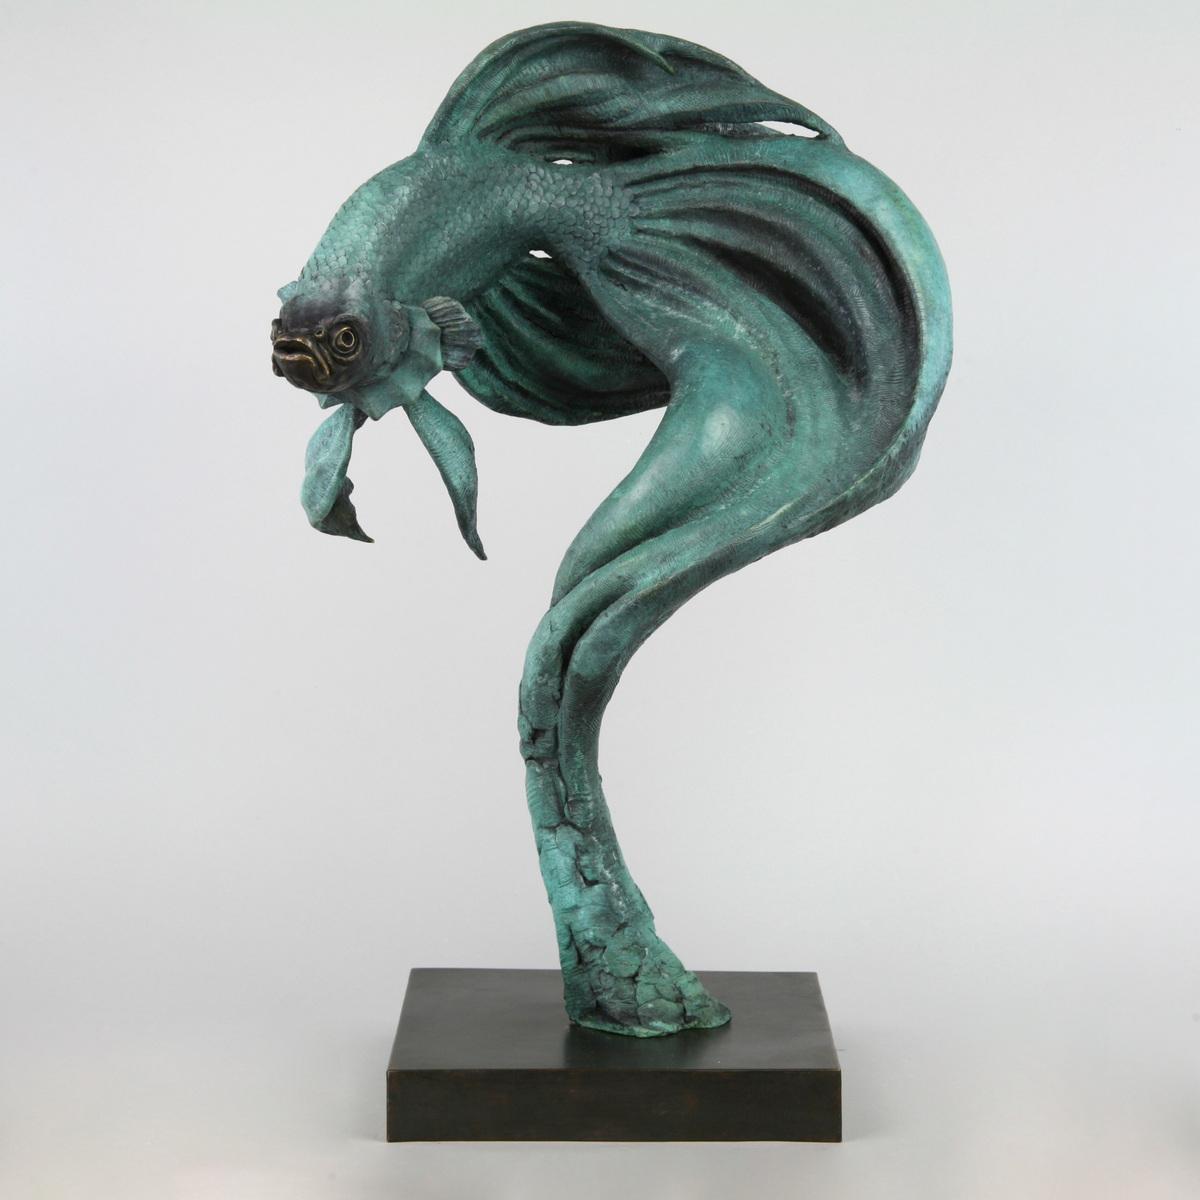 Andrzej Szymczyk Figurative Sculpture - Siamese Fighter Fish-original bronze wildlife sculpture-artwork-contemporary art